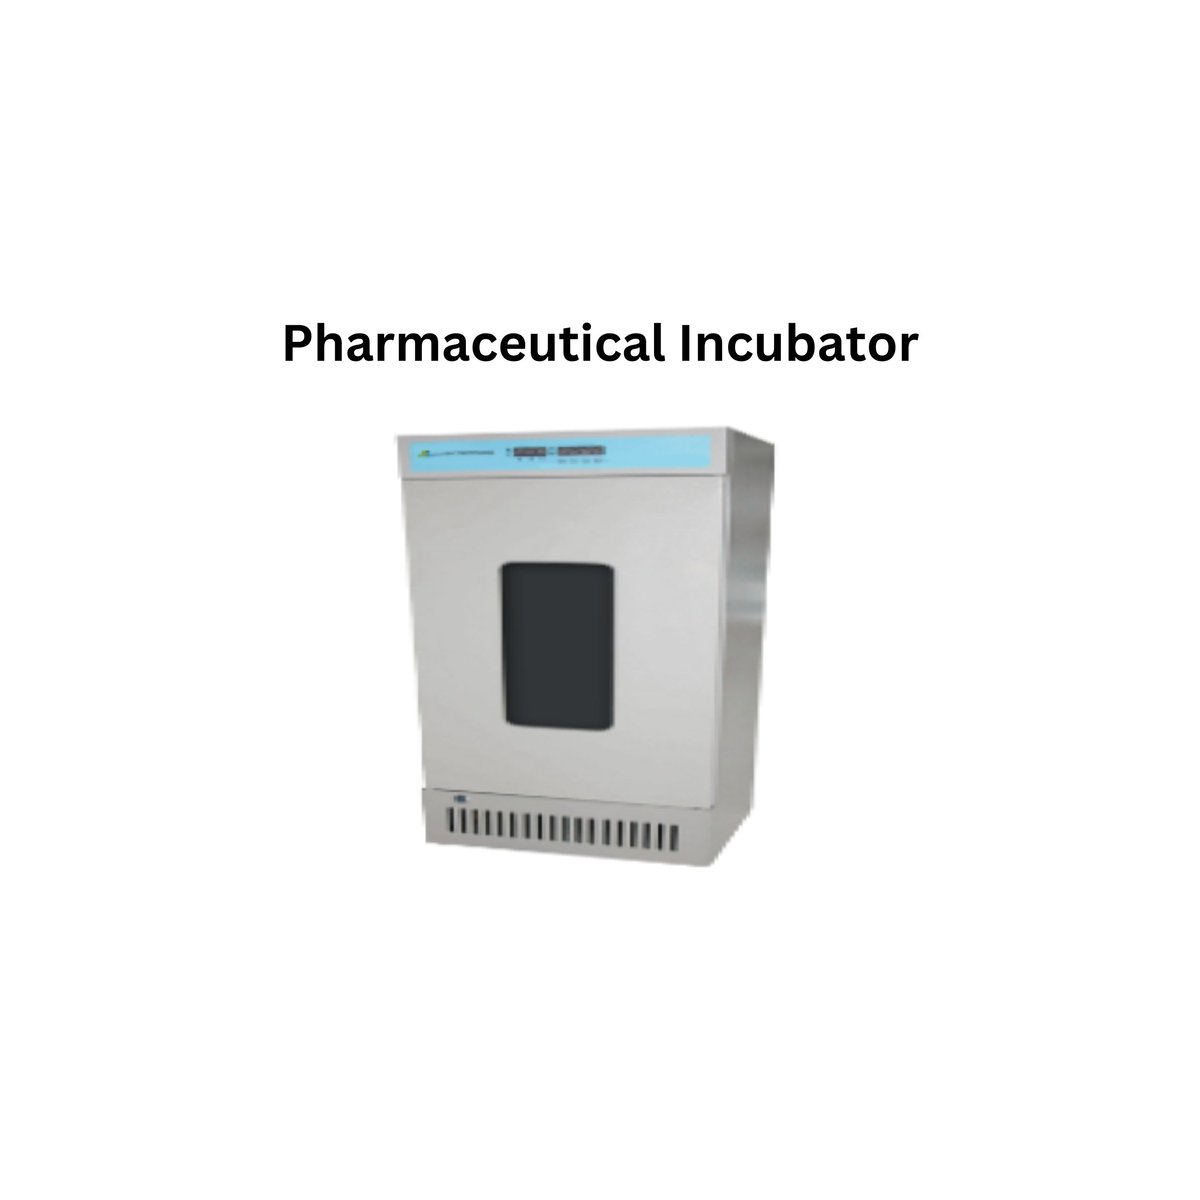 Pharmaceutical Incubator.jpg